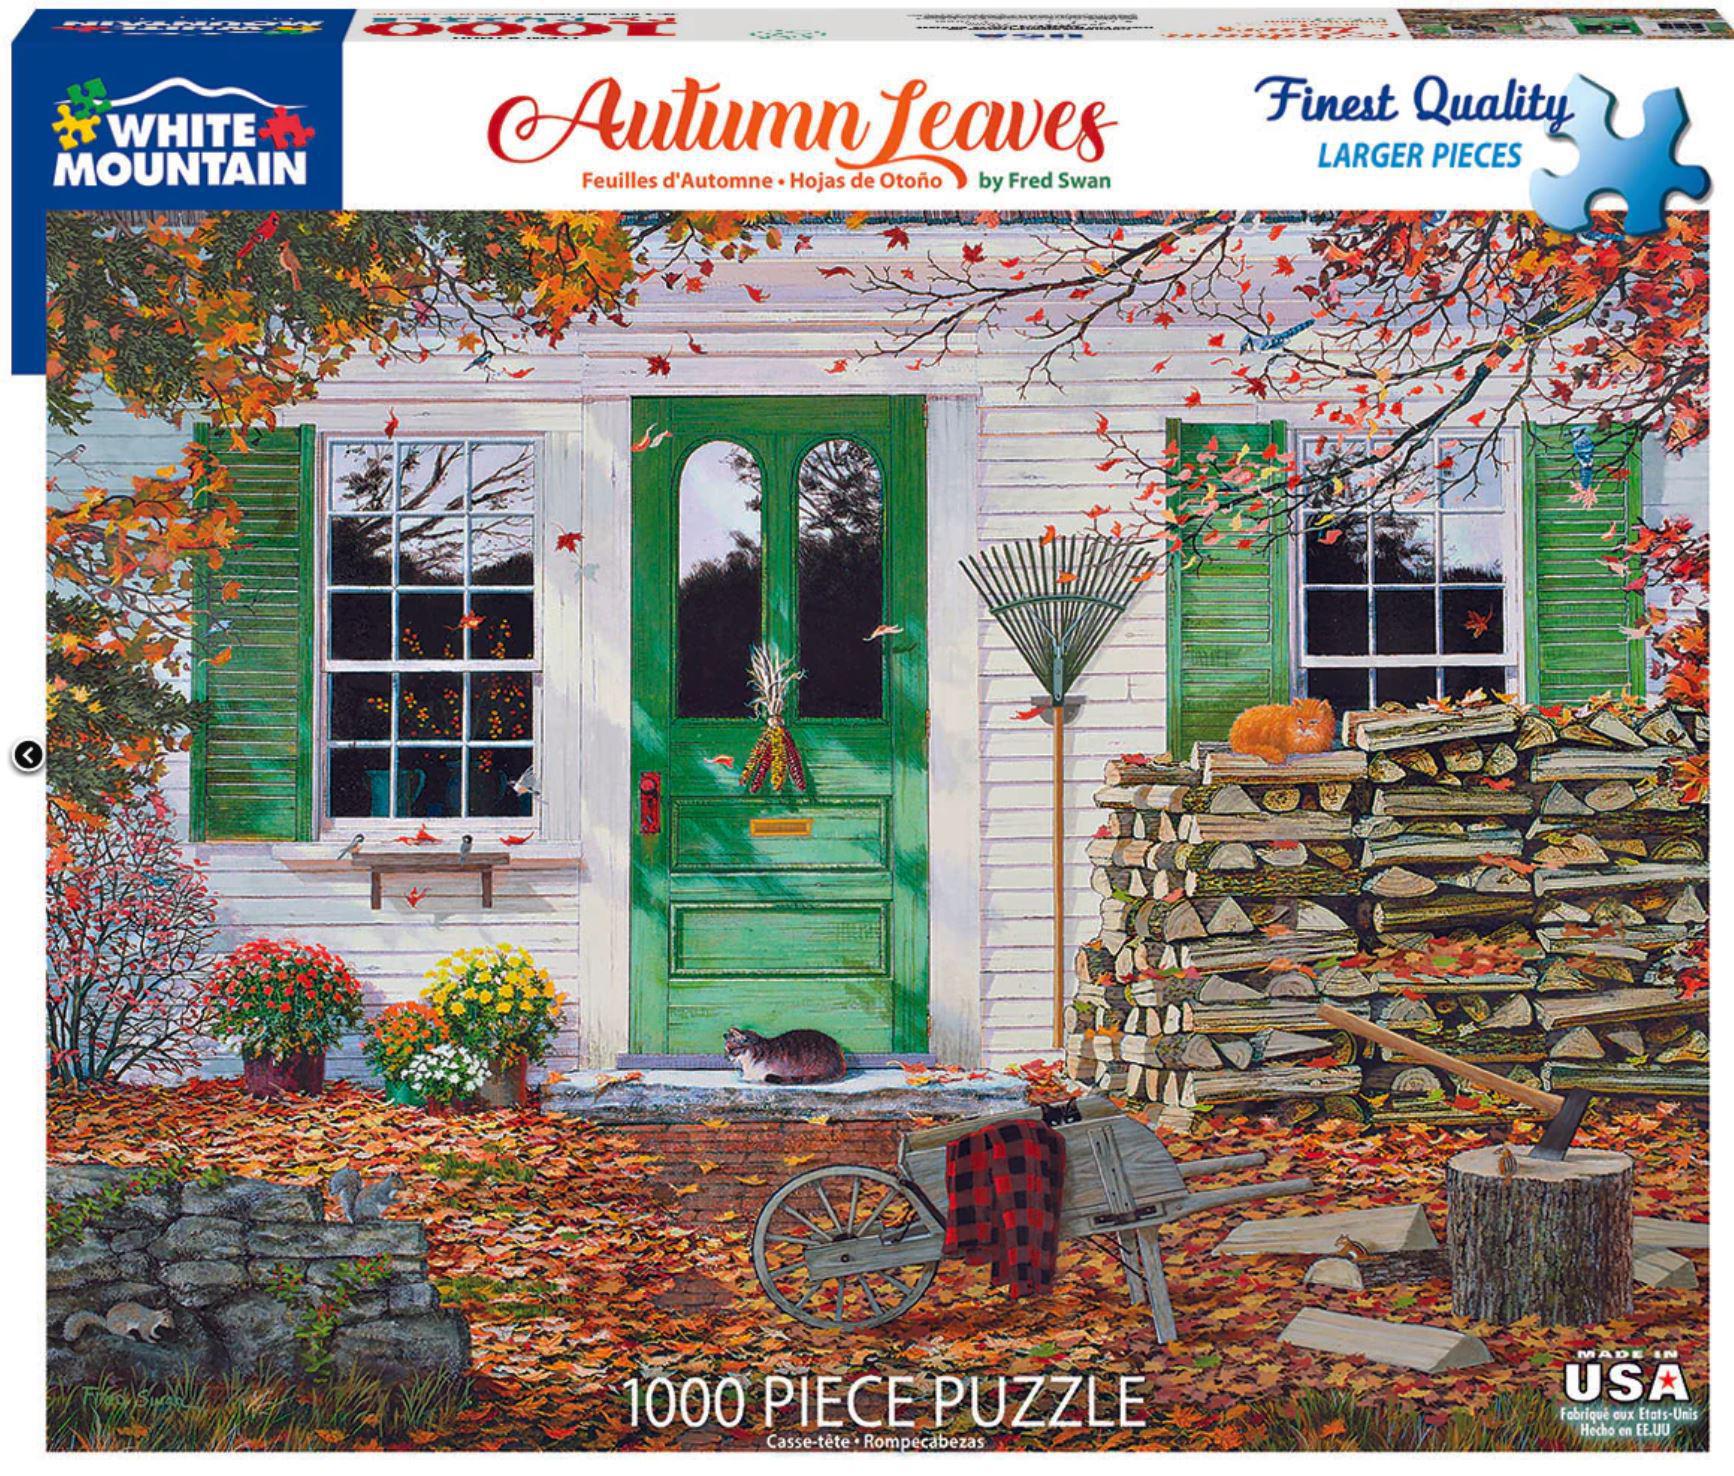 White Mountain Jigsaw Puzzle | Autumn Leaves 1000 Piece